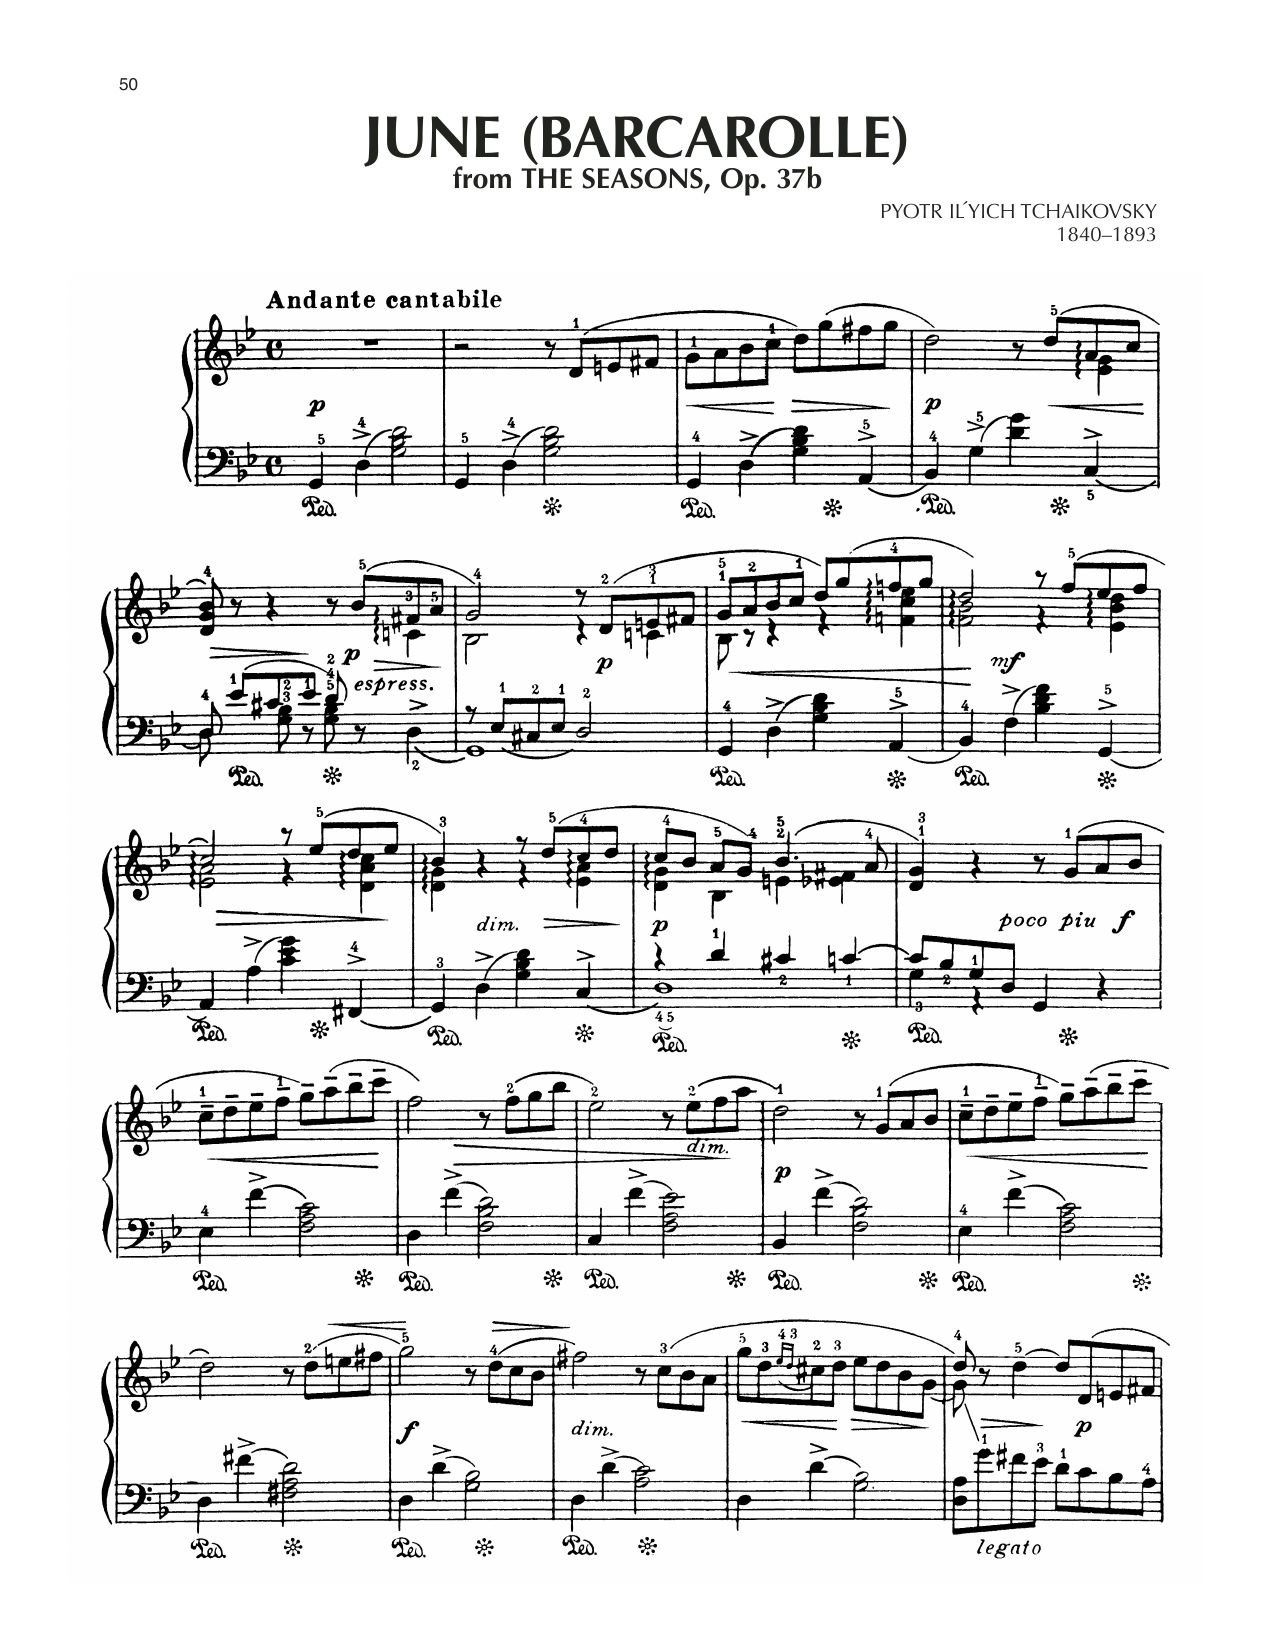 Download Pyotr Il'yich Tchaikovsky June: Barcarolle, Op. 37a/b Sheet Music